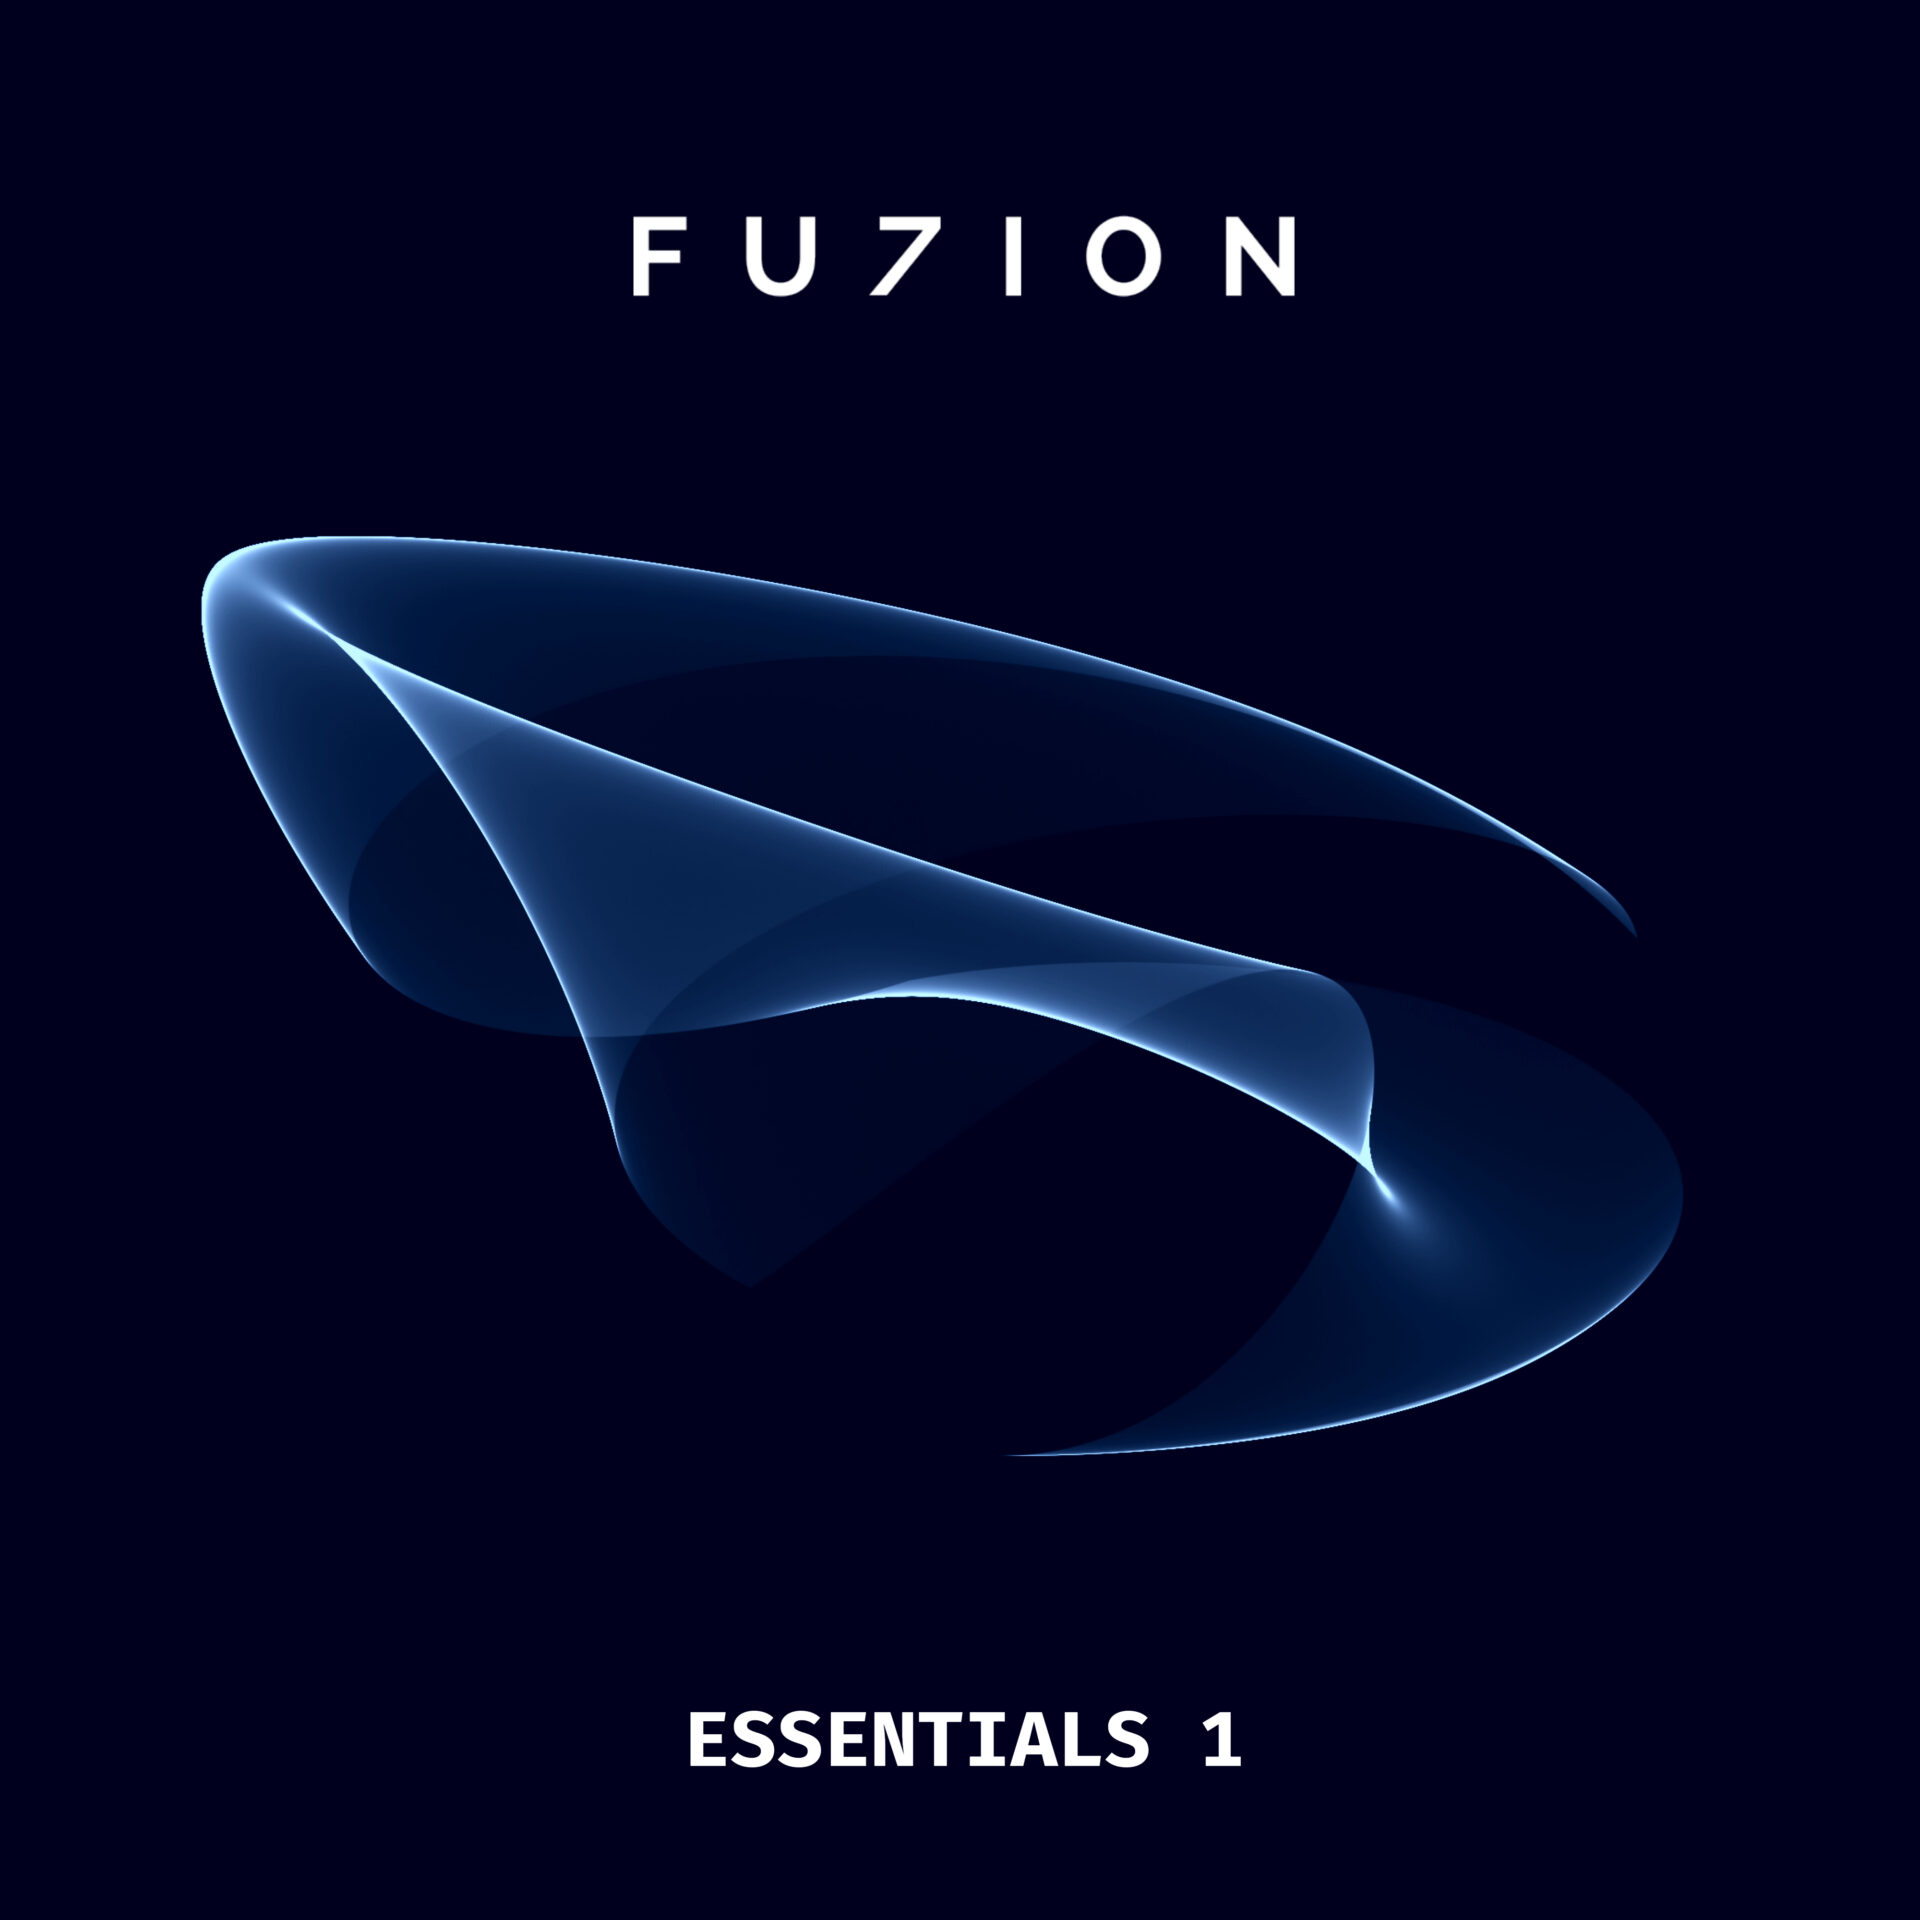 Fuzion presents Essentials 1